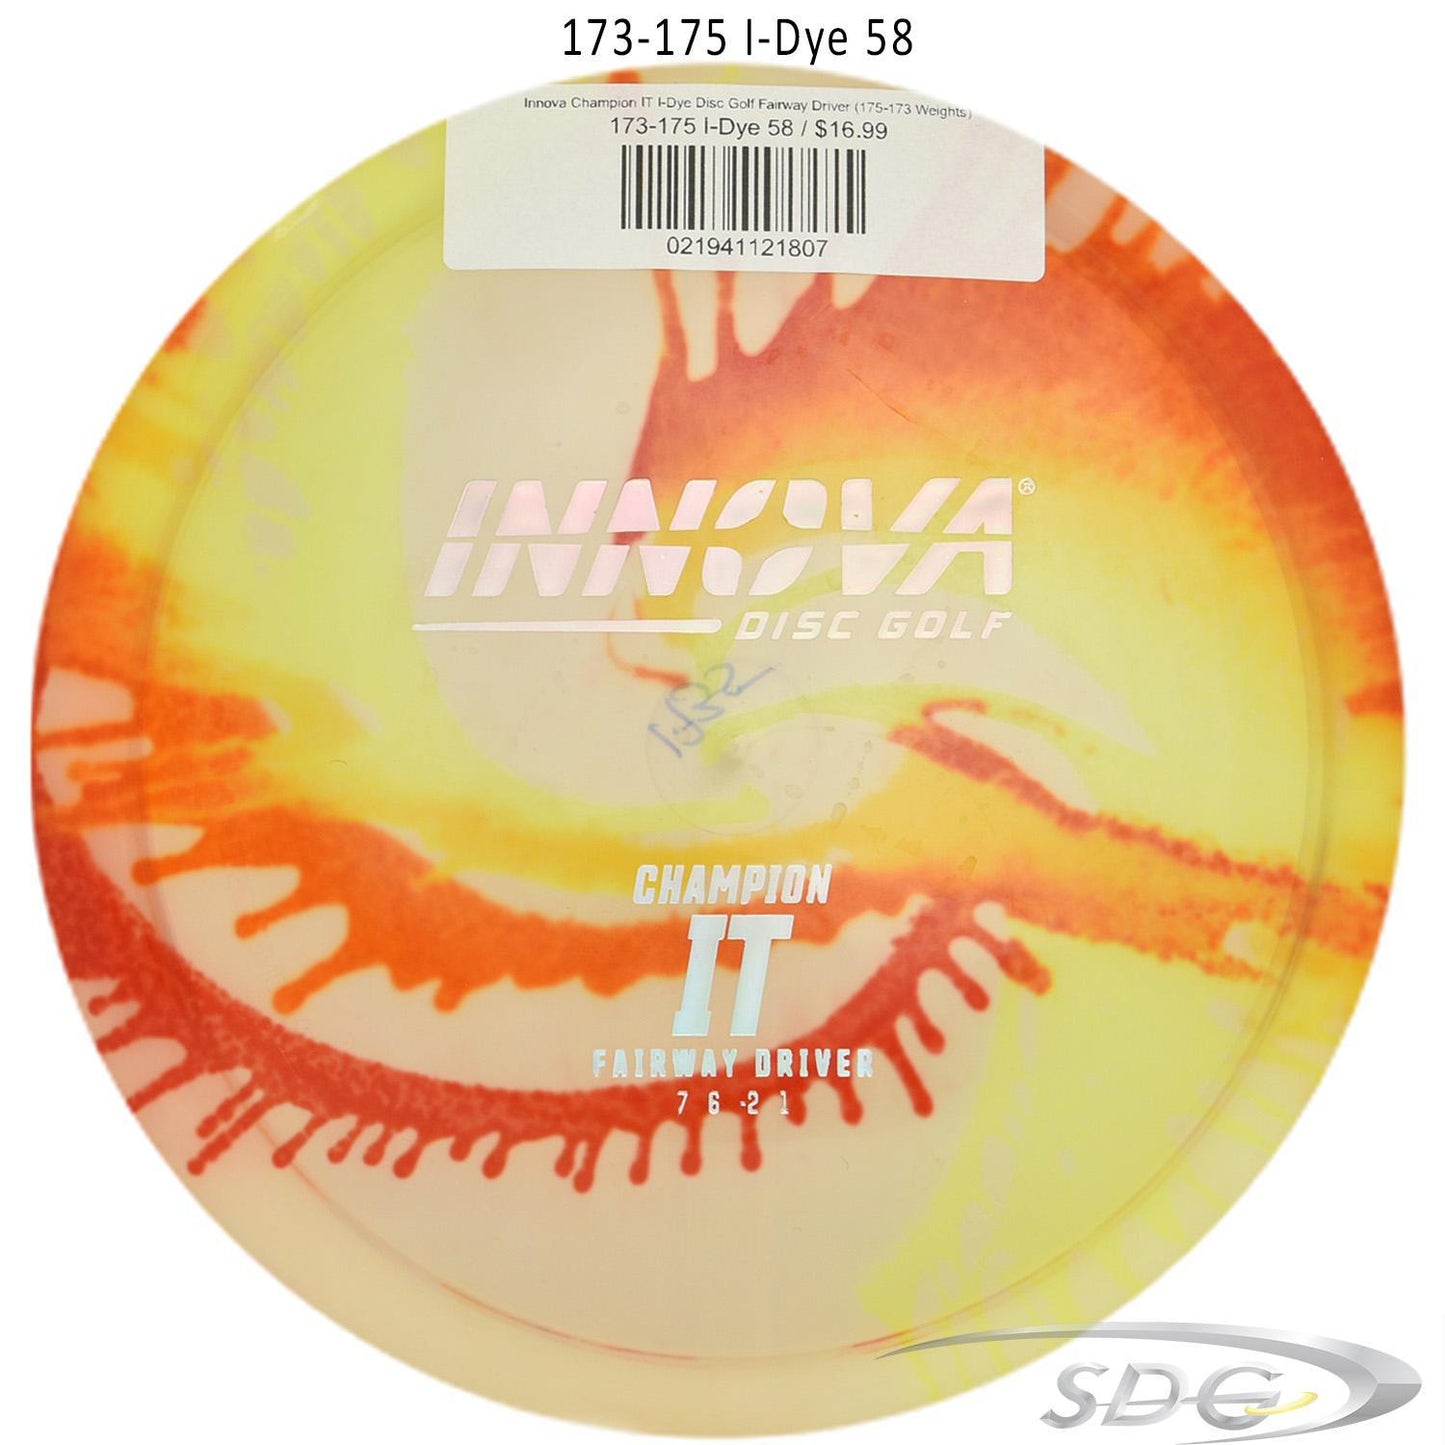 innova-champion-it-i-dye-disc-golf-fairway-driver 173-175 I-Dye 58 